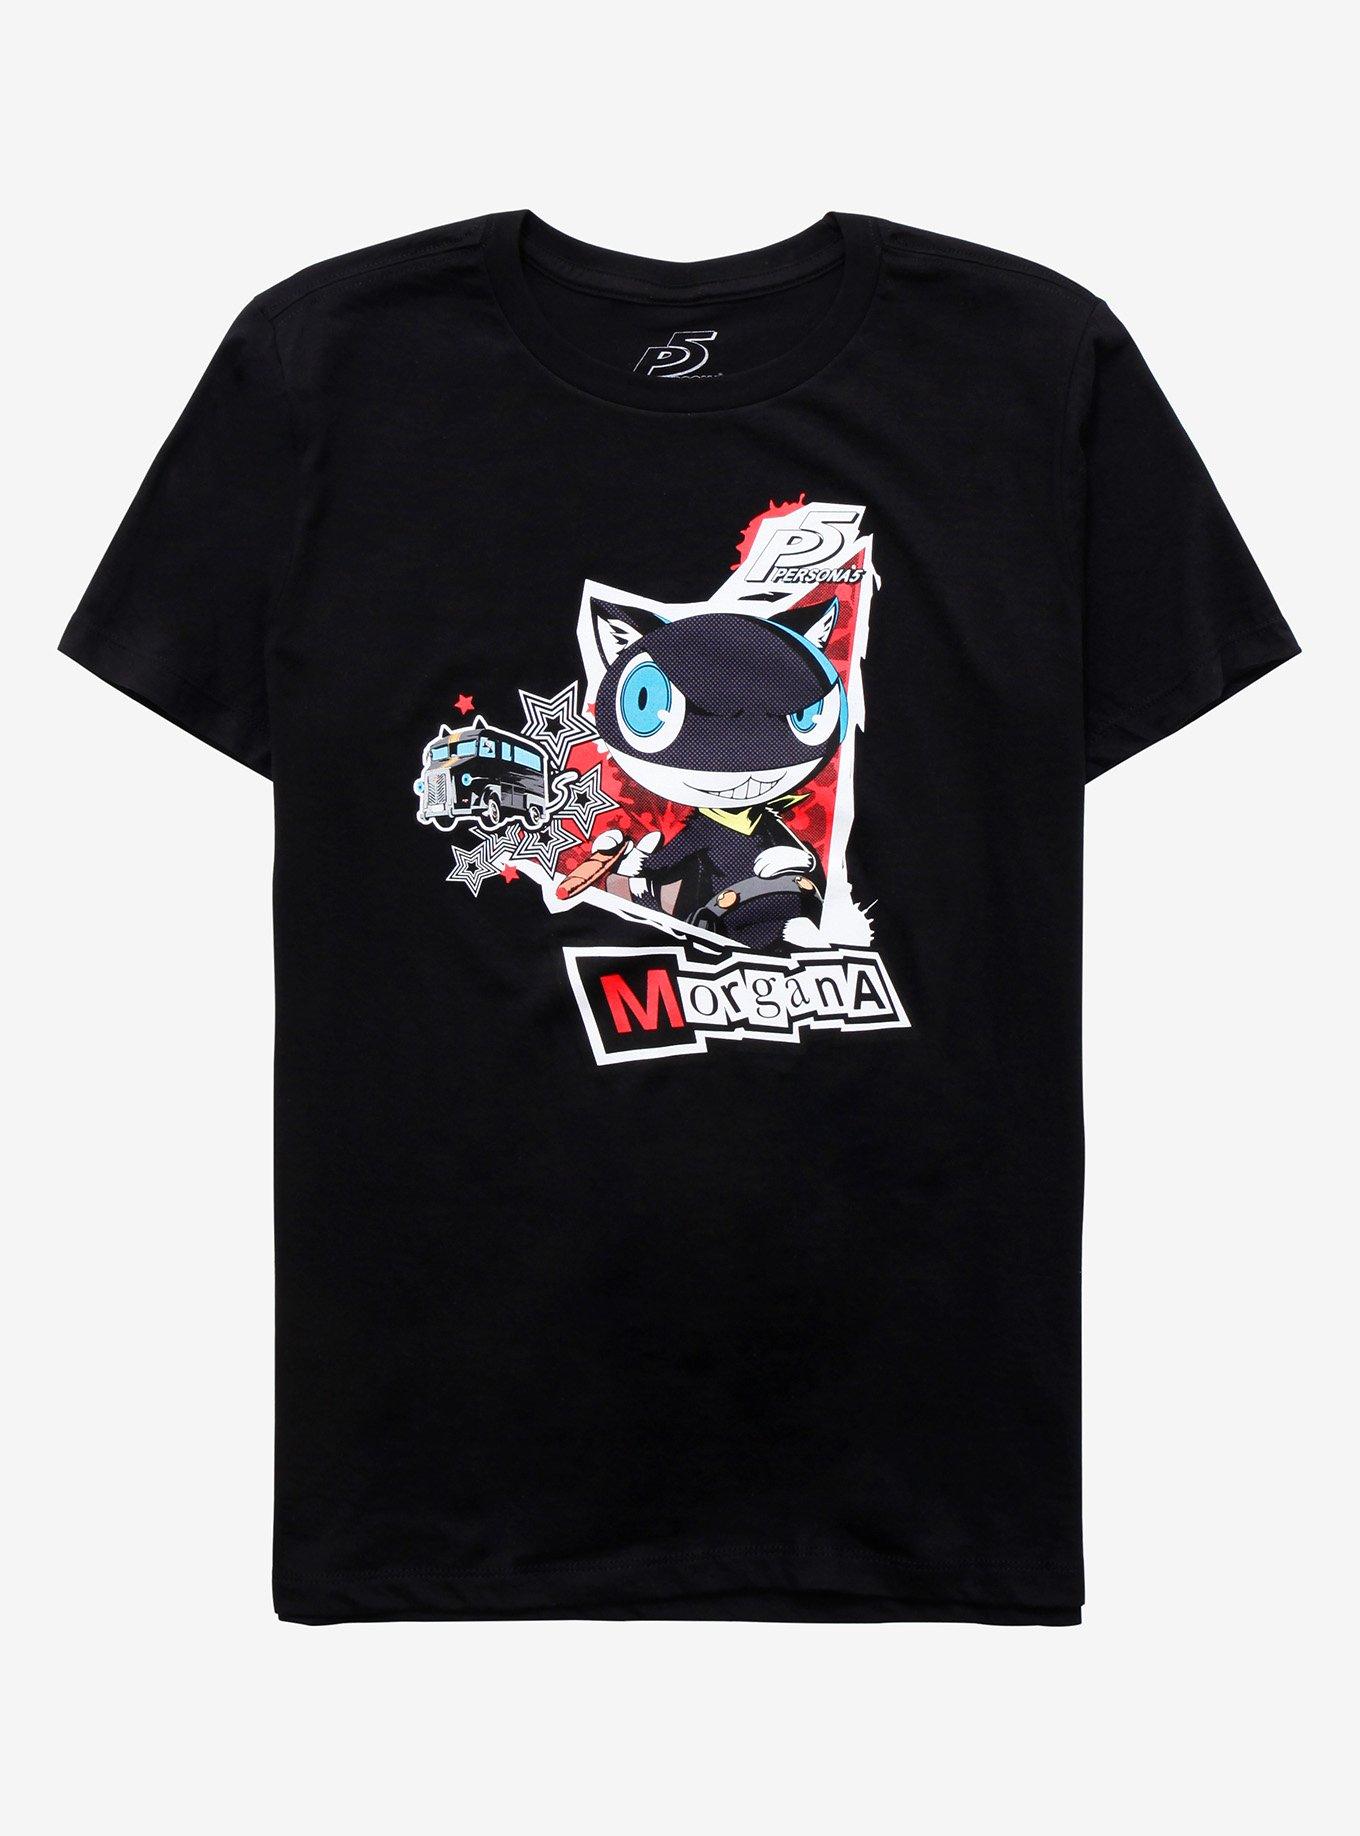 Persona 5 Morgana T-Shirt | Hot Topic